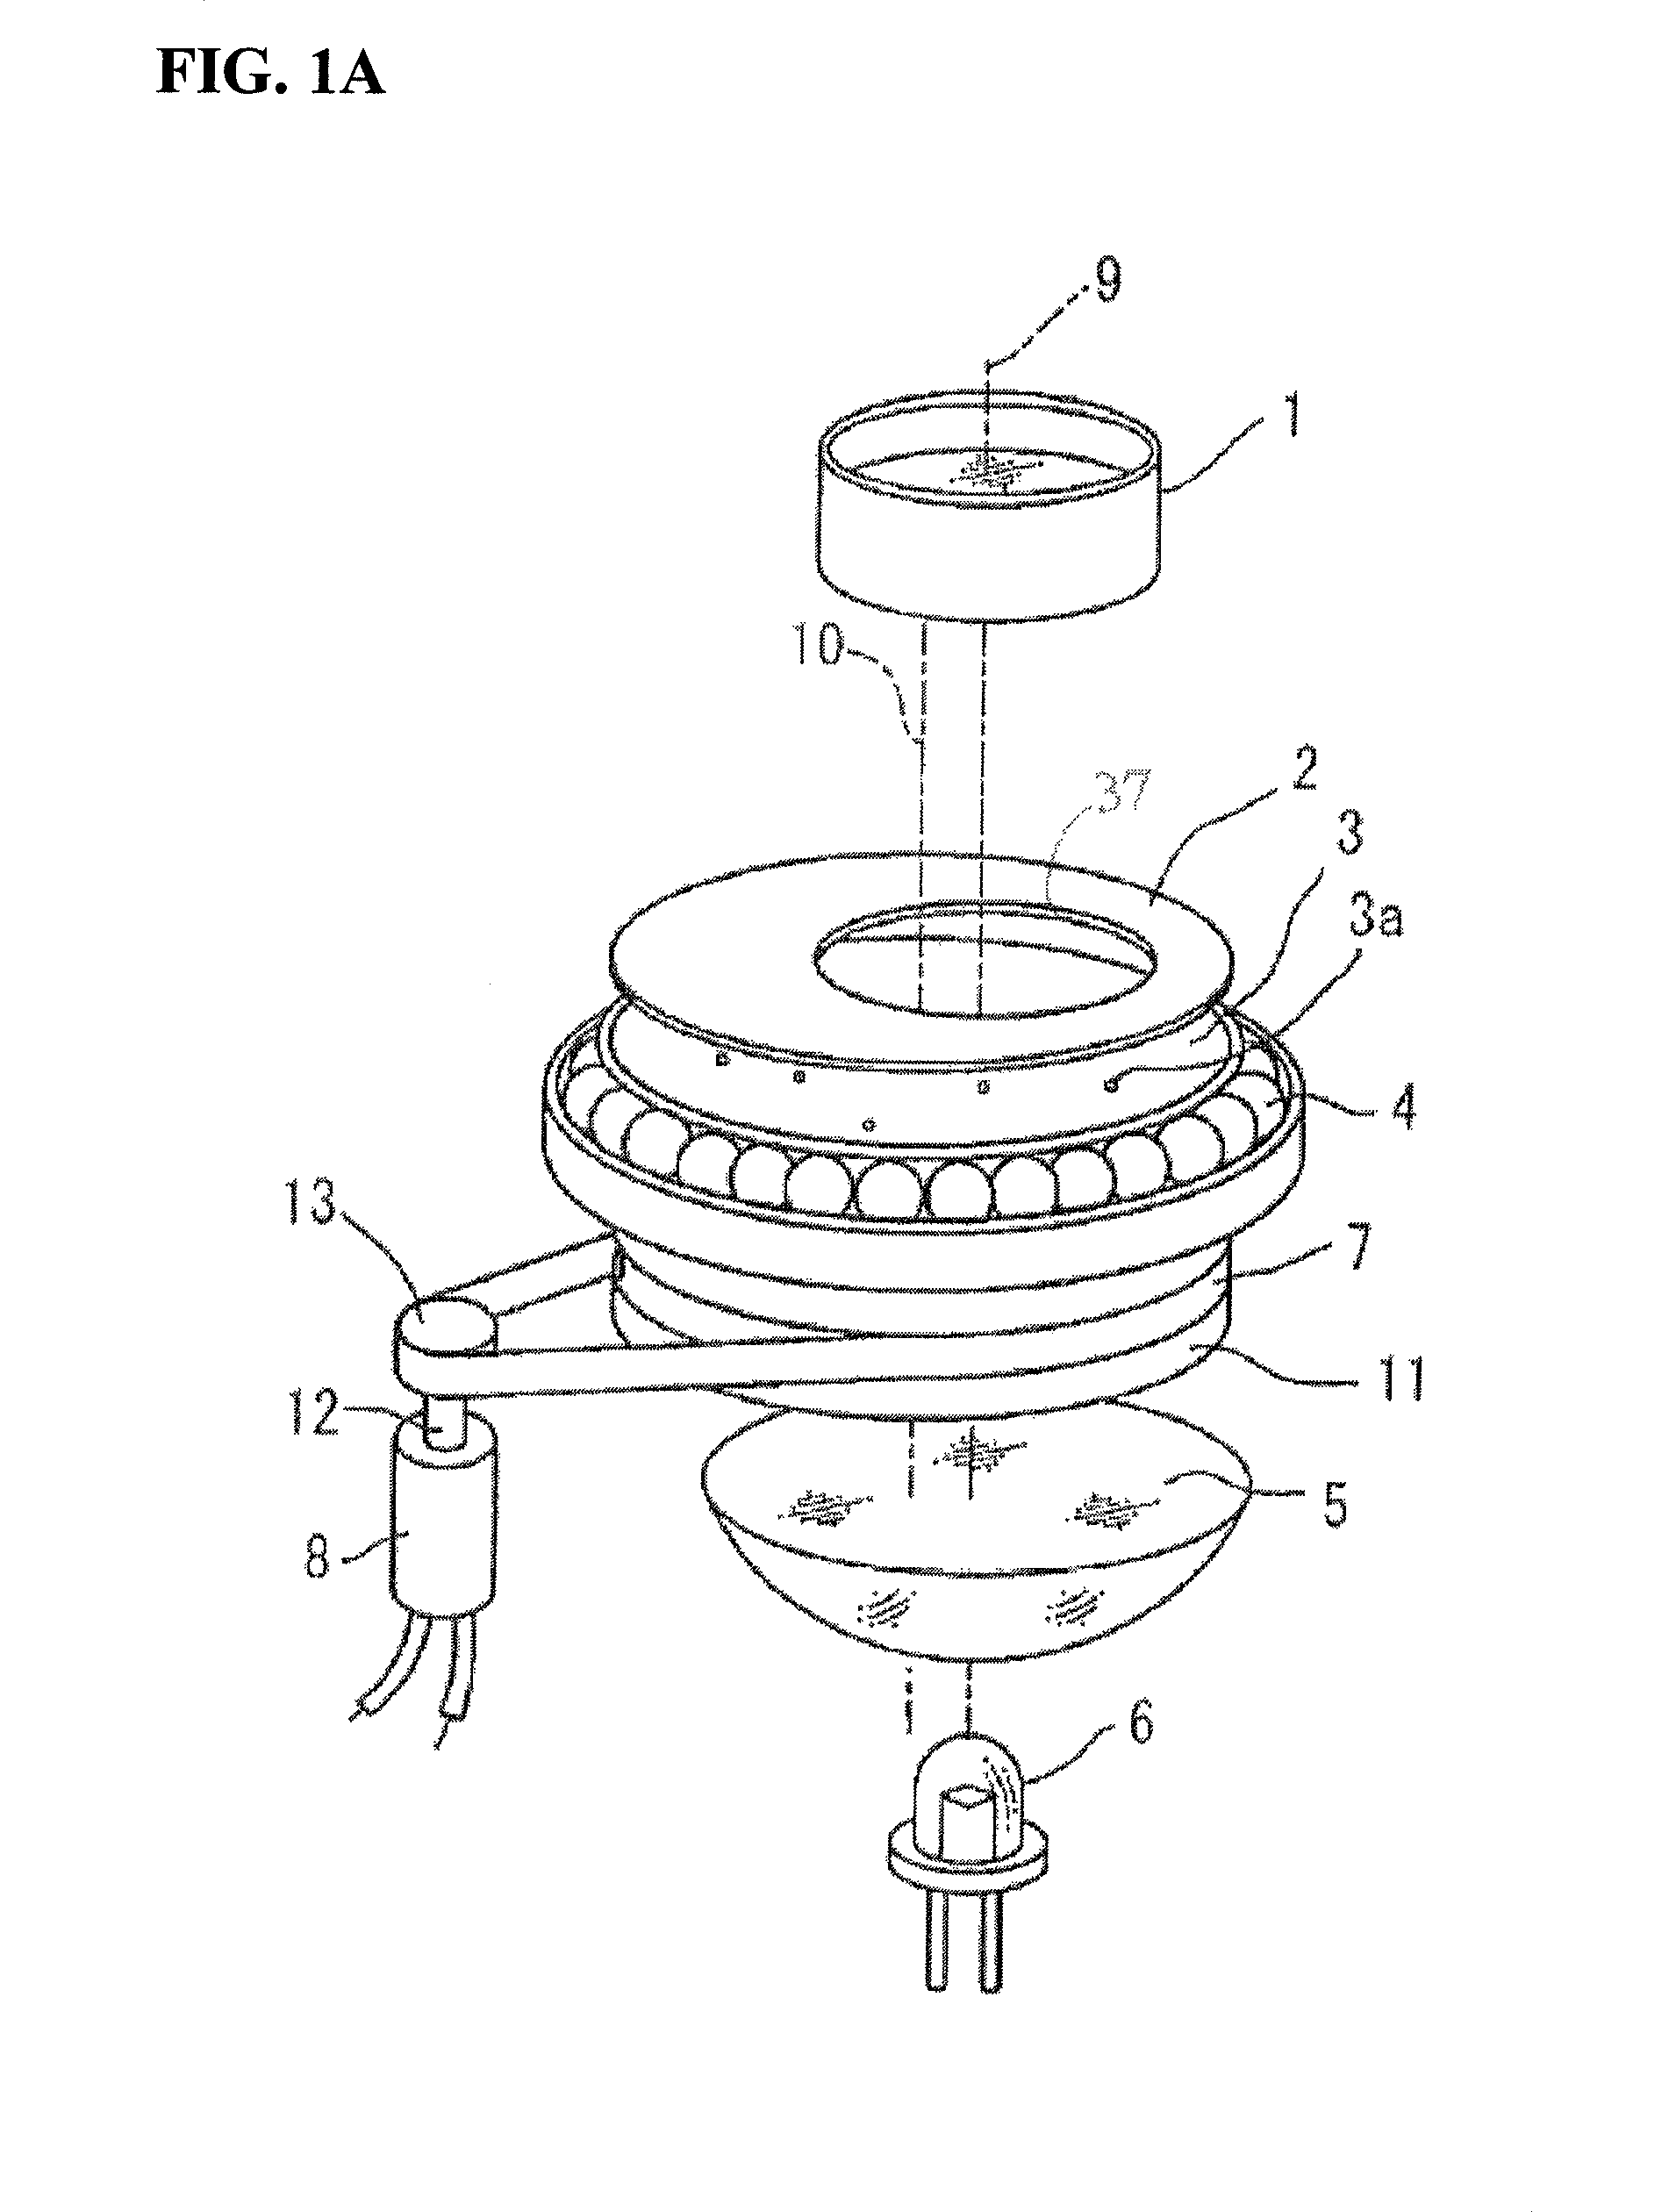 Simplified planetarium apparatus and simplified image projecting apparatus